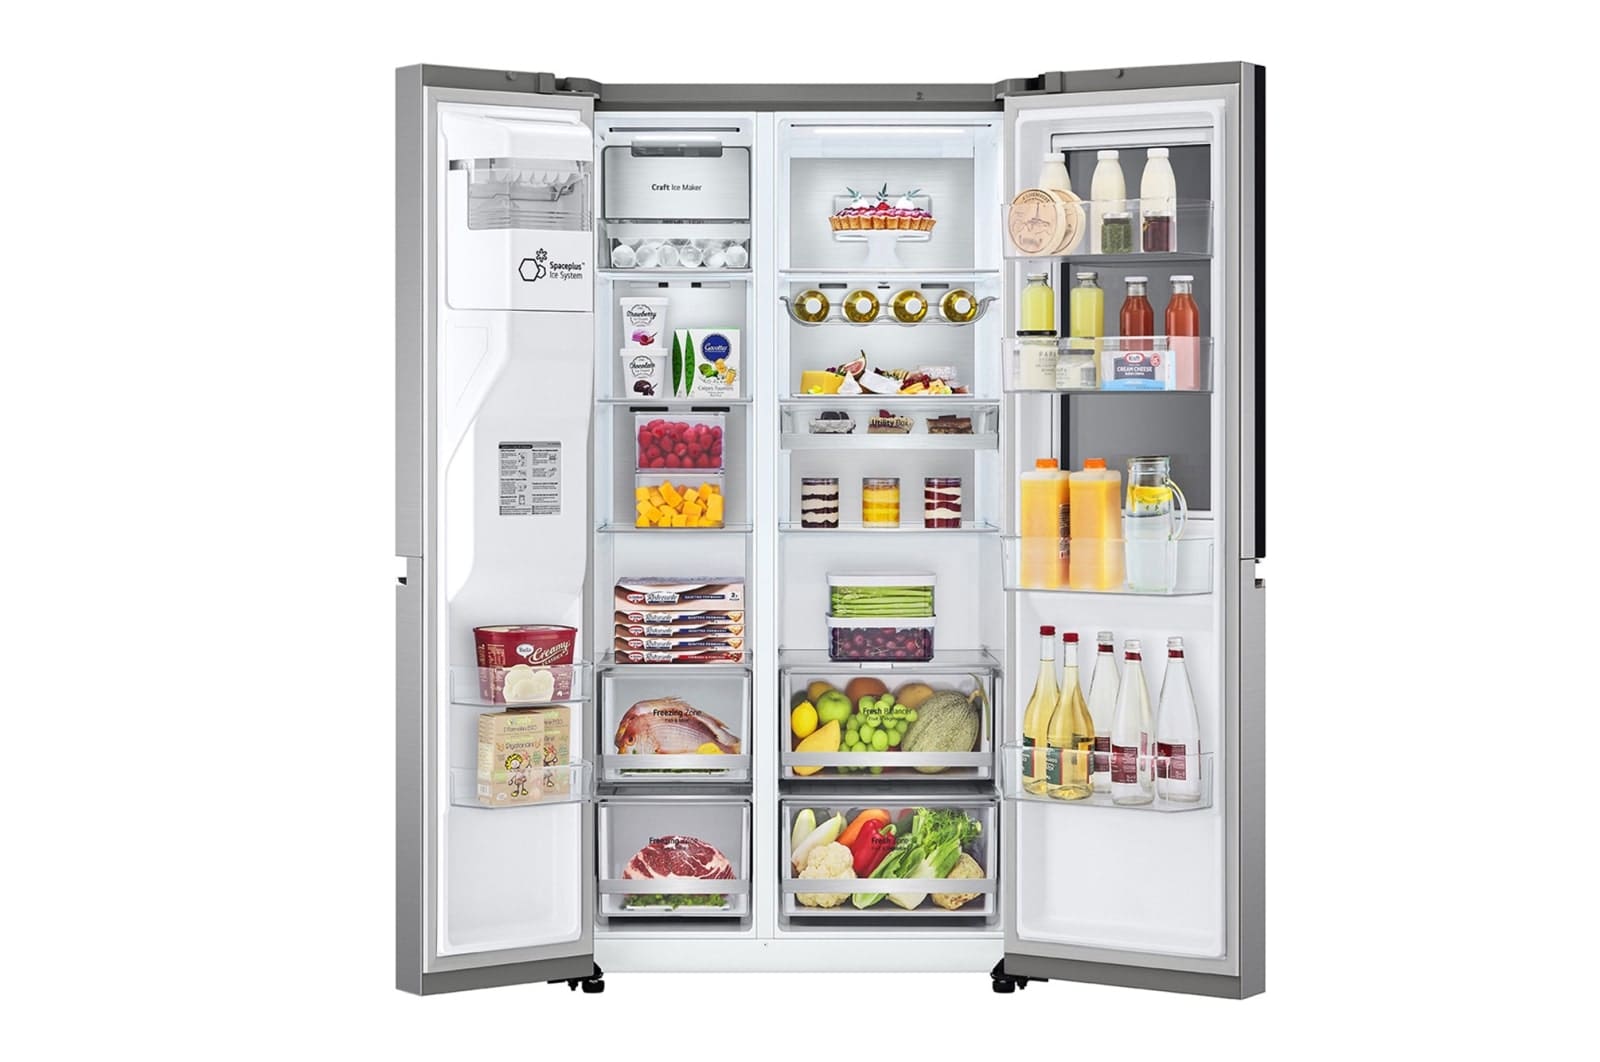 LG 598 Liters InstaView Refrigerator with UVnano™ Technology - Silver